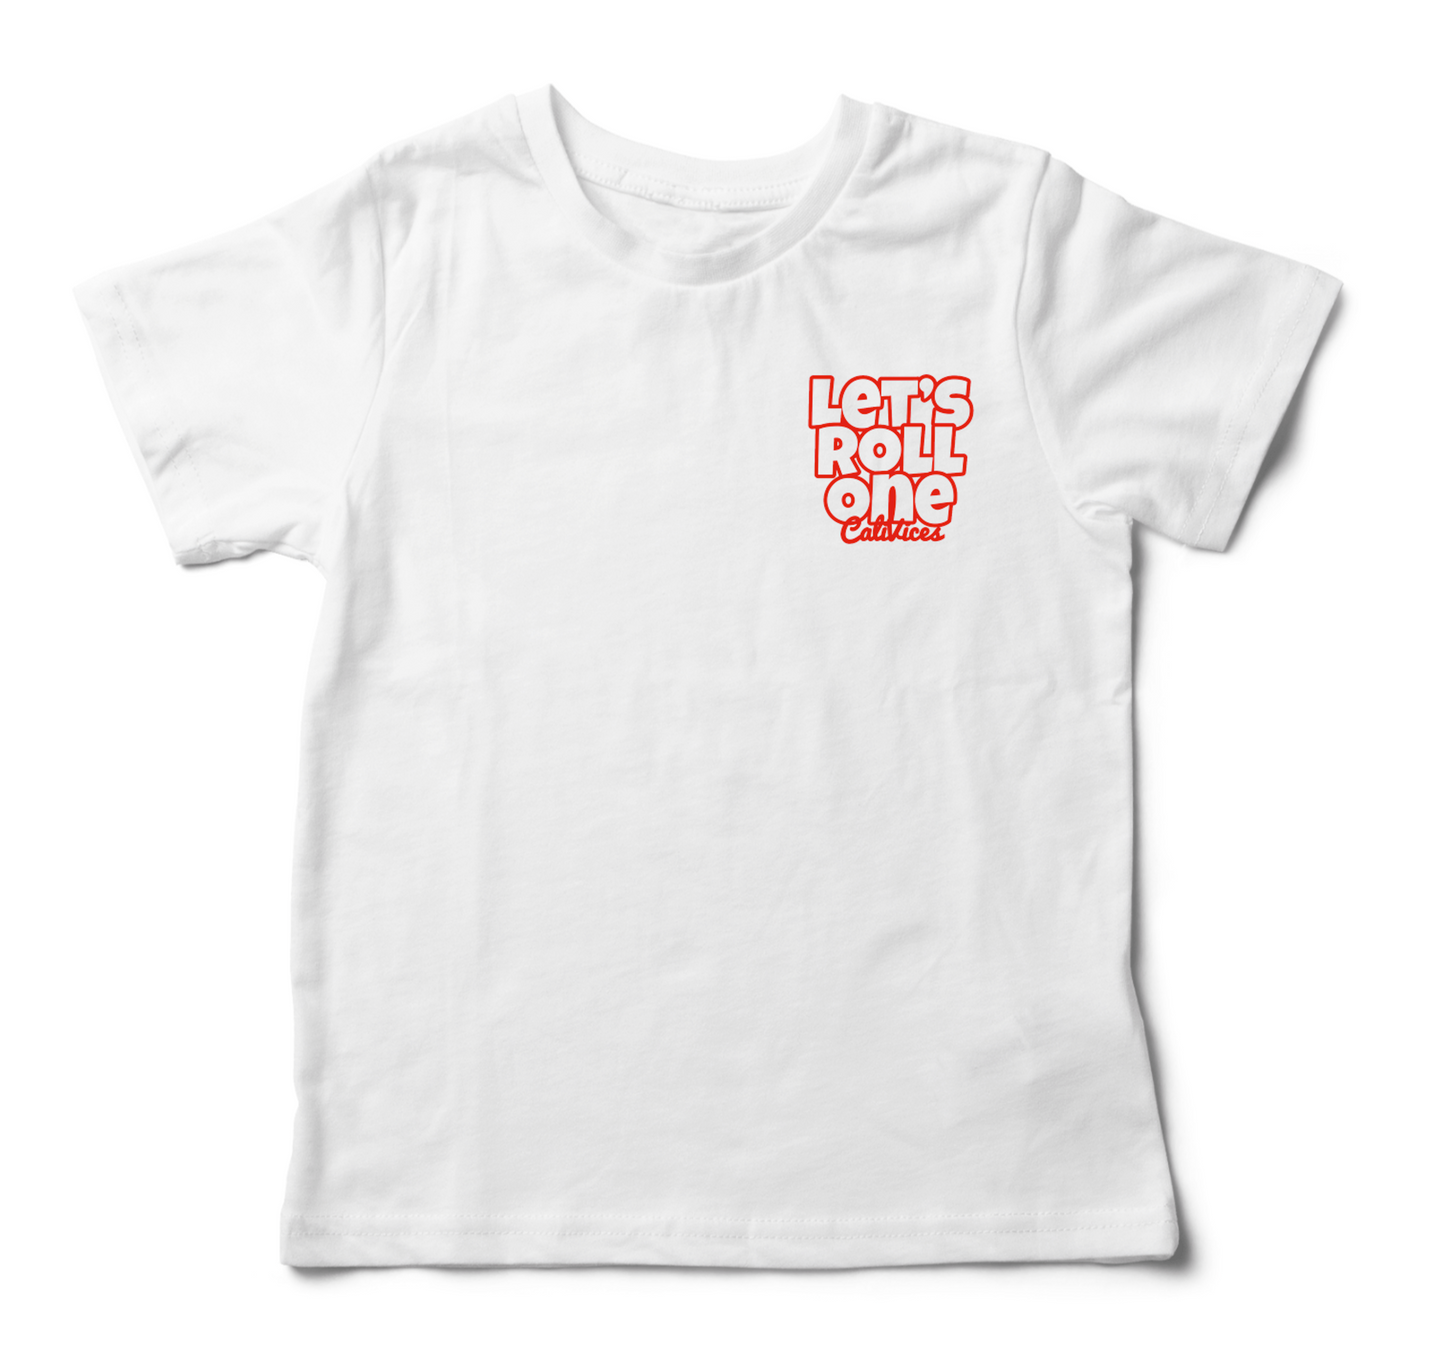 Red “Roll One” 💨 Tee Shirt (corner pocket)